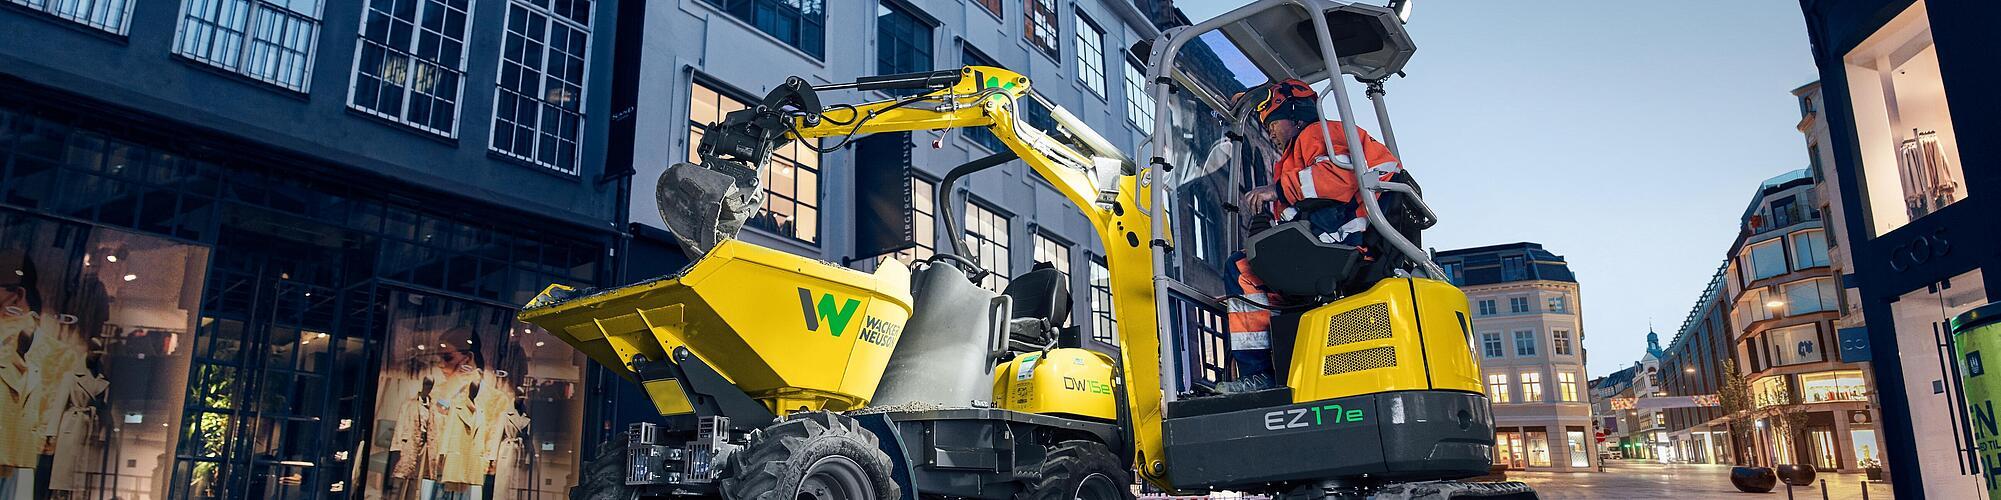 Wacker Neuson Zero Tail-gravemaskine EZ17e i aktion på en byggeplads i byen.